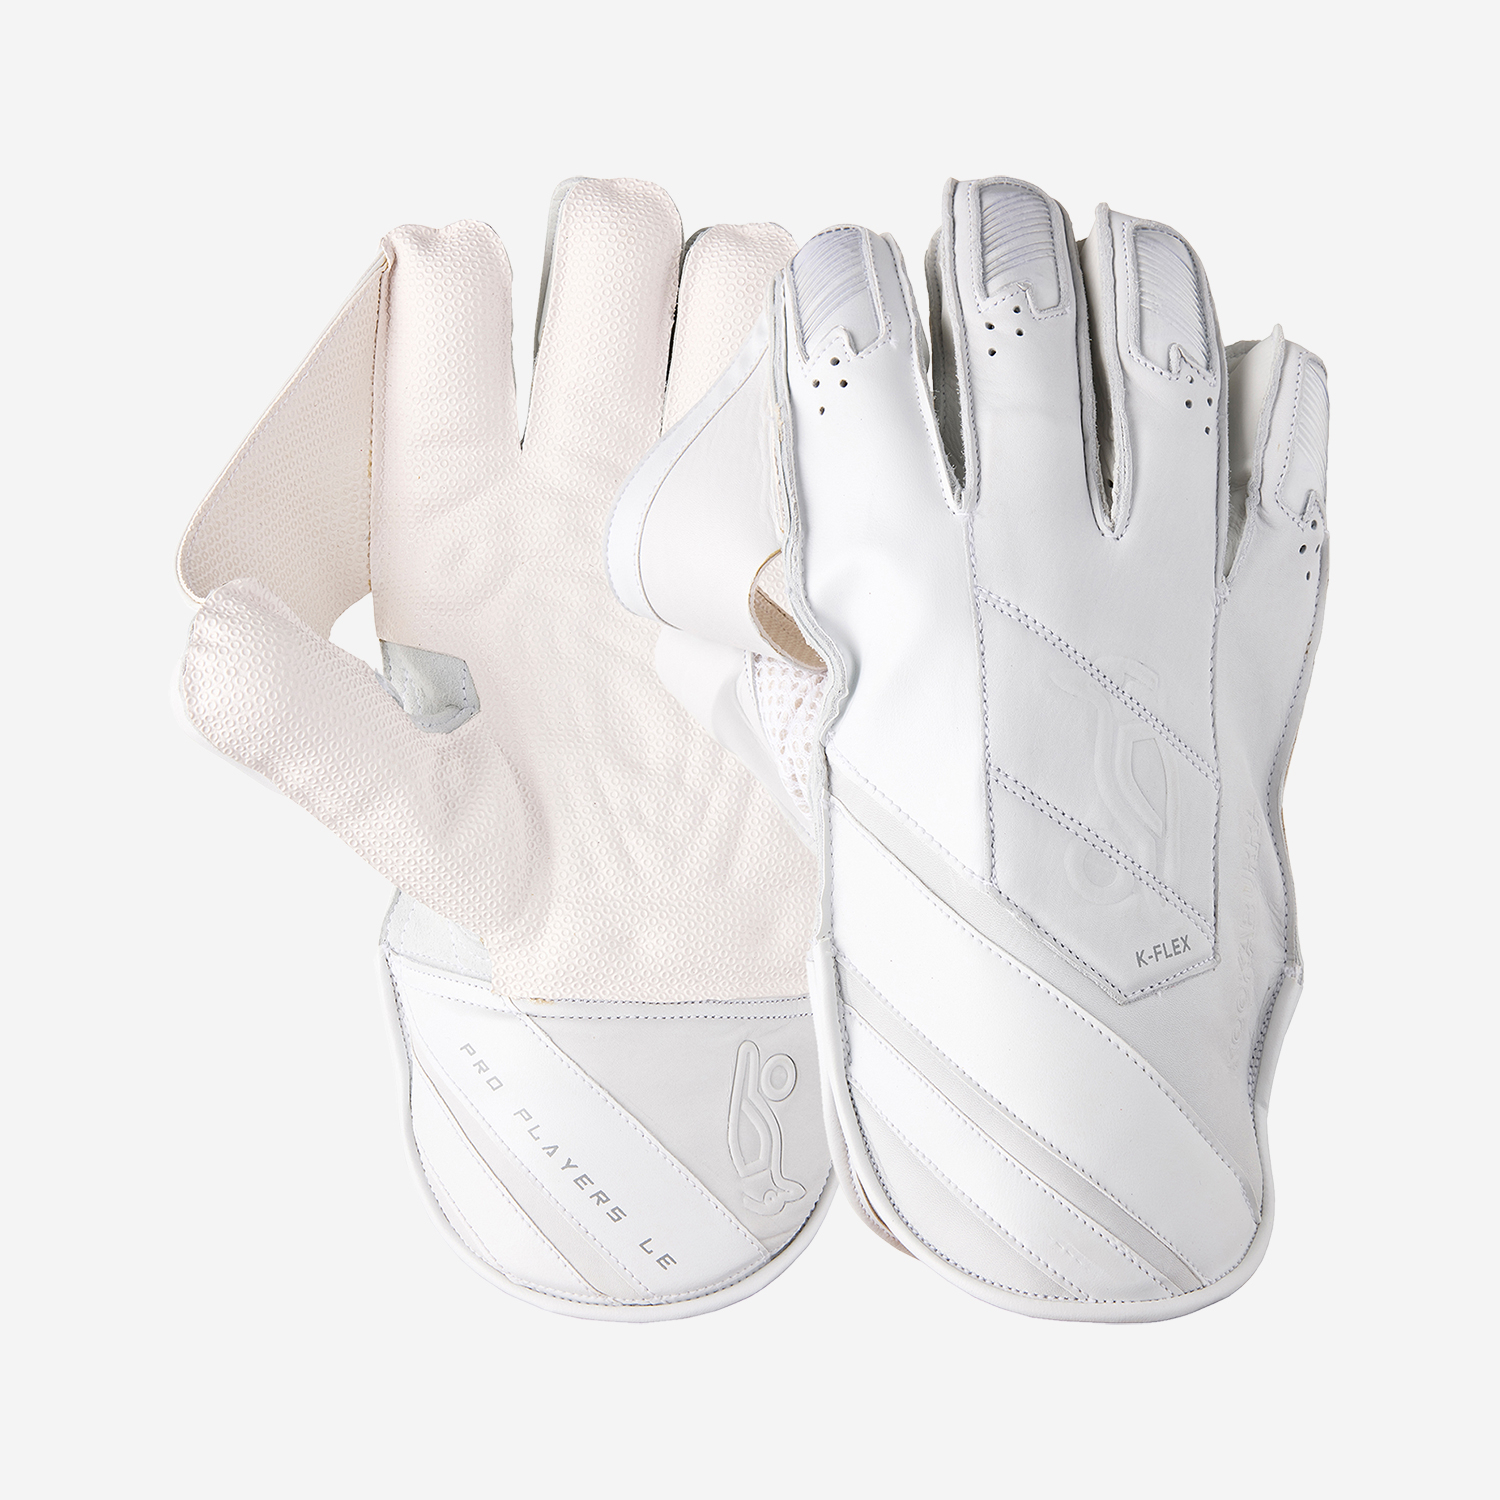 Ghost WK Gloves Pro